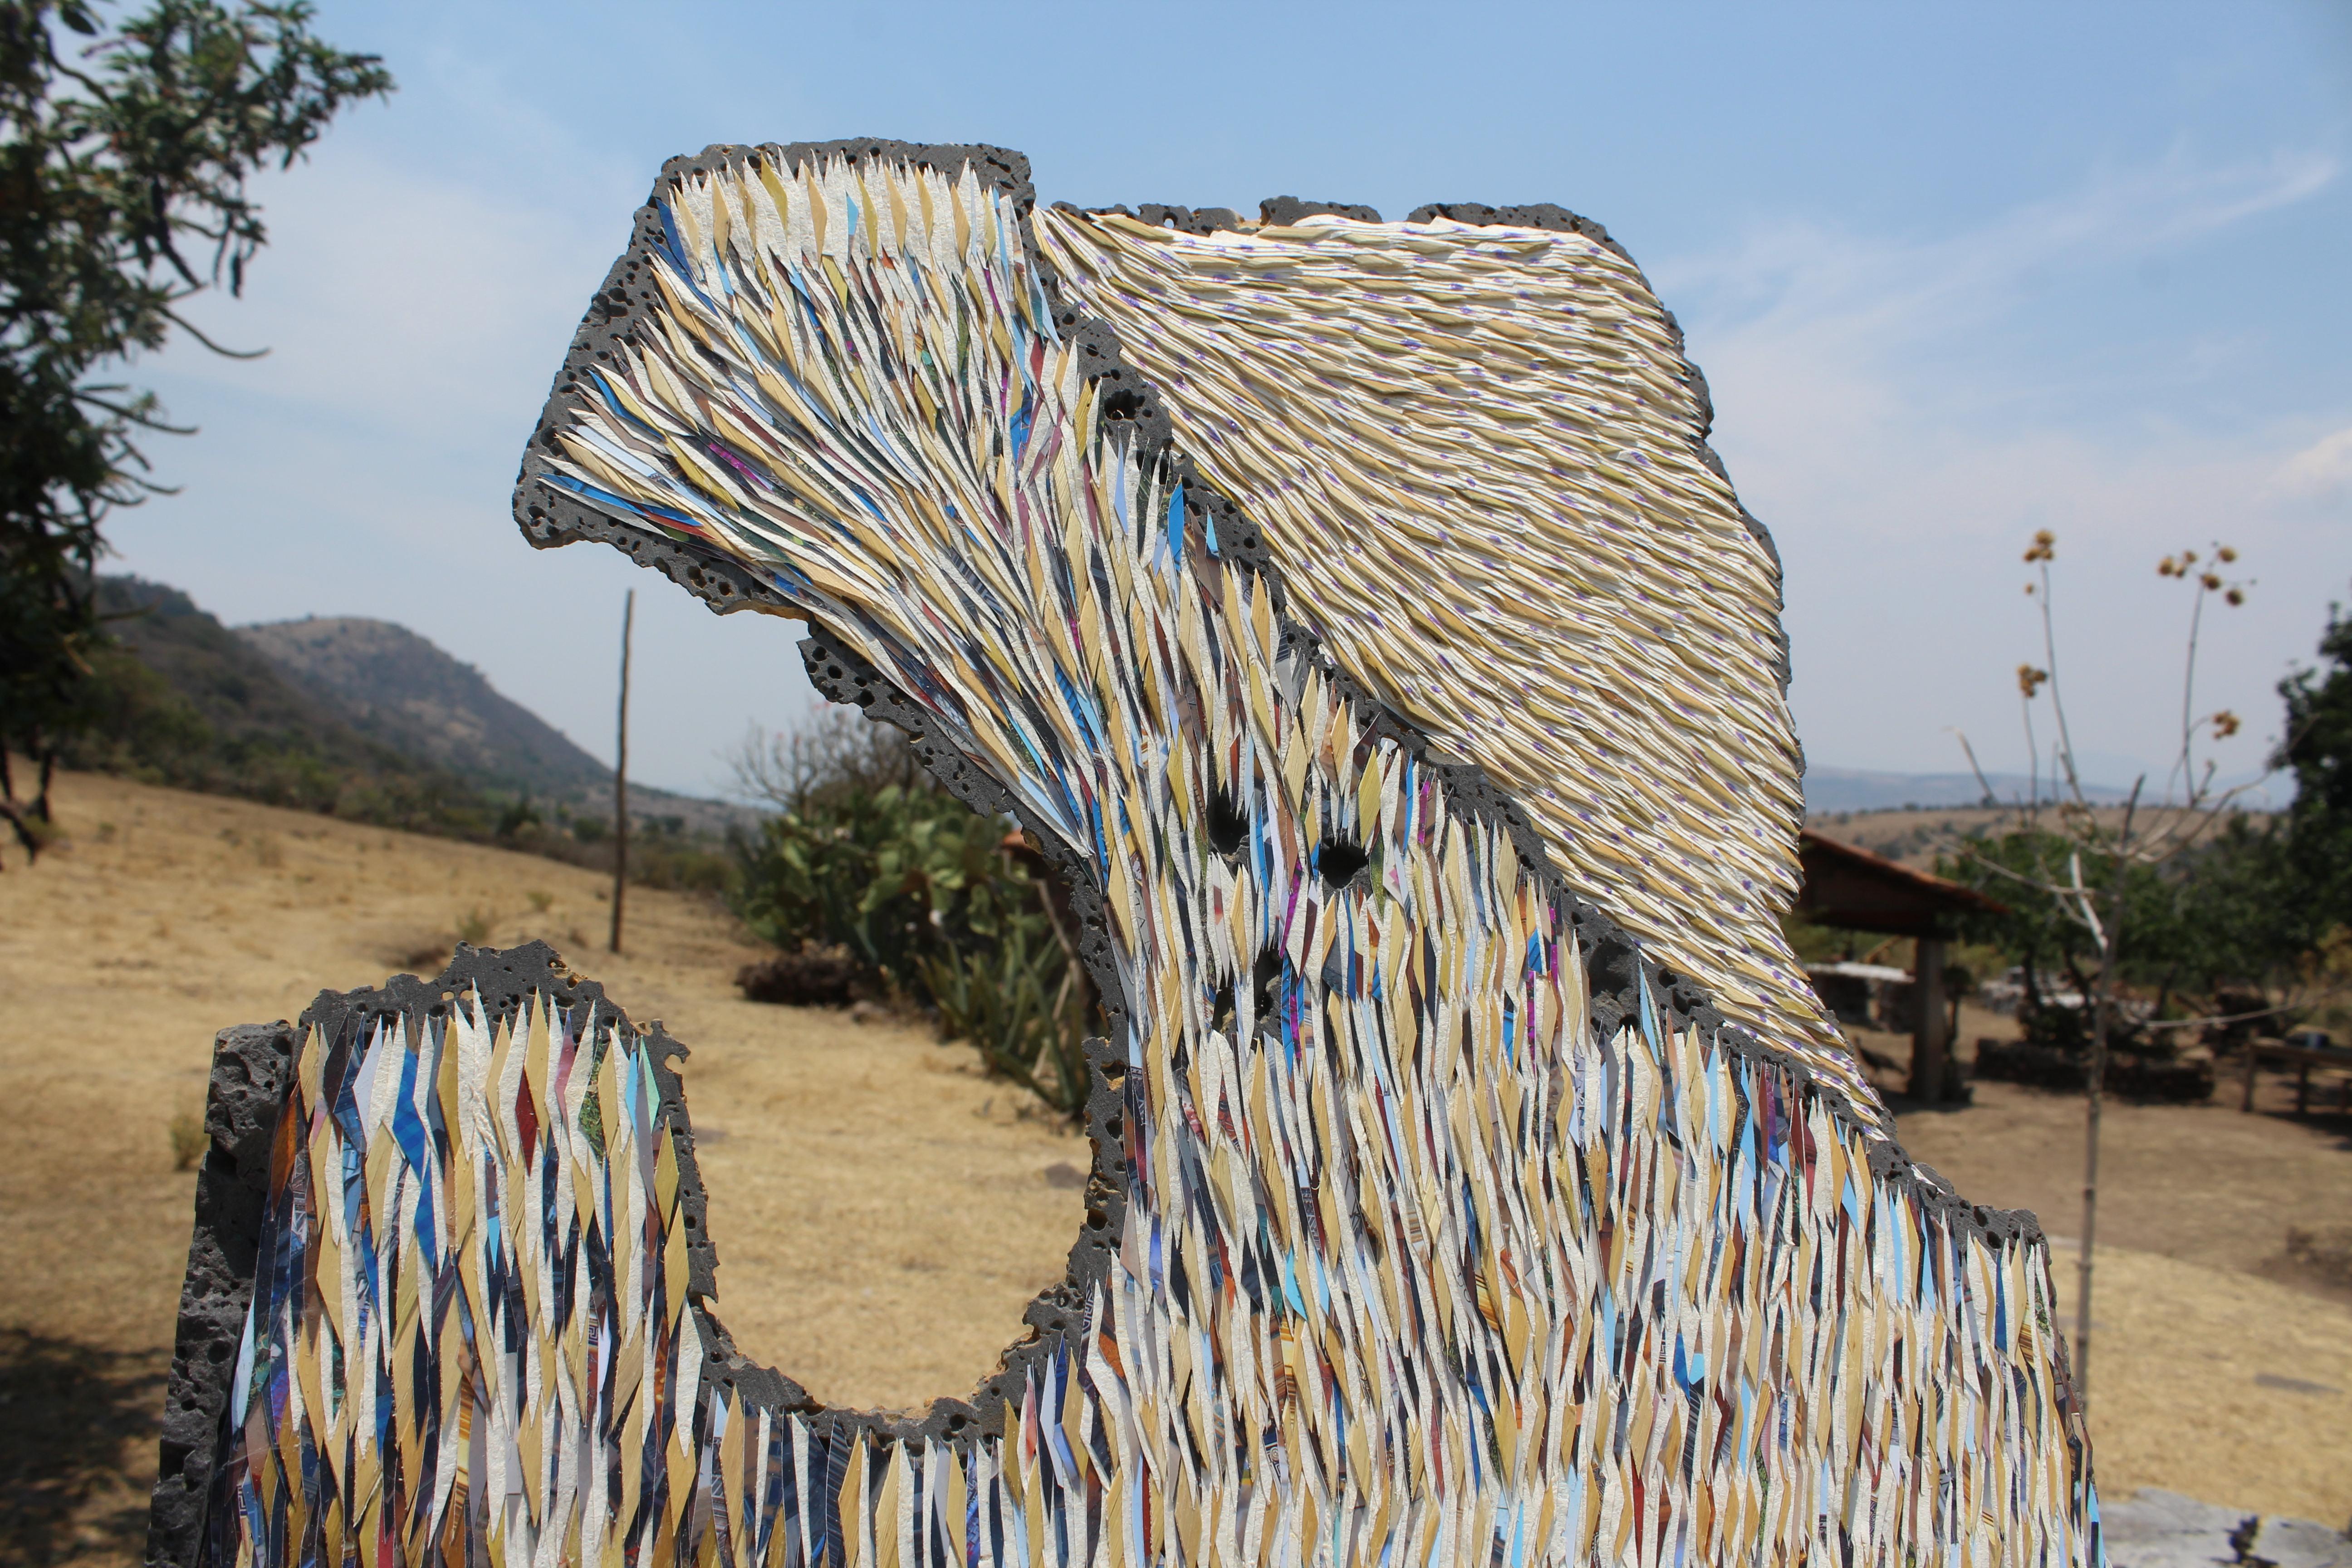 #mandala #spiritualart #introspecction #sculpture #nature #landscape #information #outdoors #contemporaryart #stone 

JUANA MARTÍNEZ 
 (Tlalpujajua, Michoacán, 1953) Lives and works in Tlalpujahua, Michoacán. 

Juana lives in an isolated cabin in